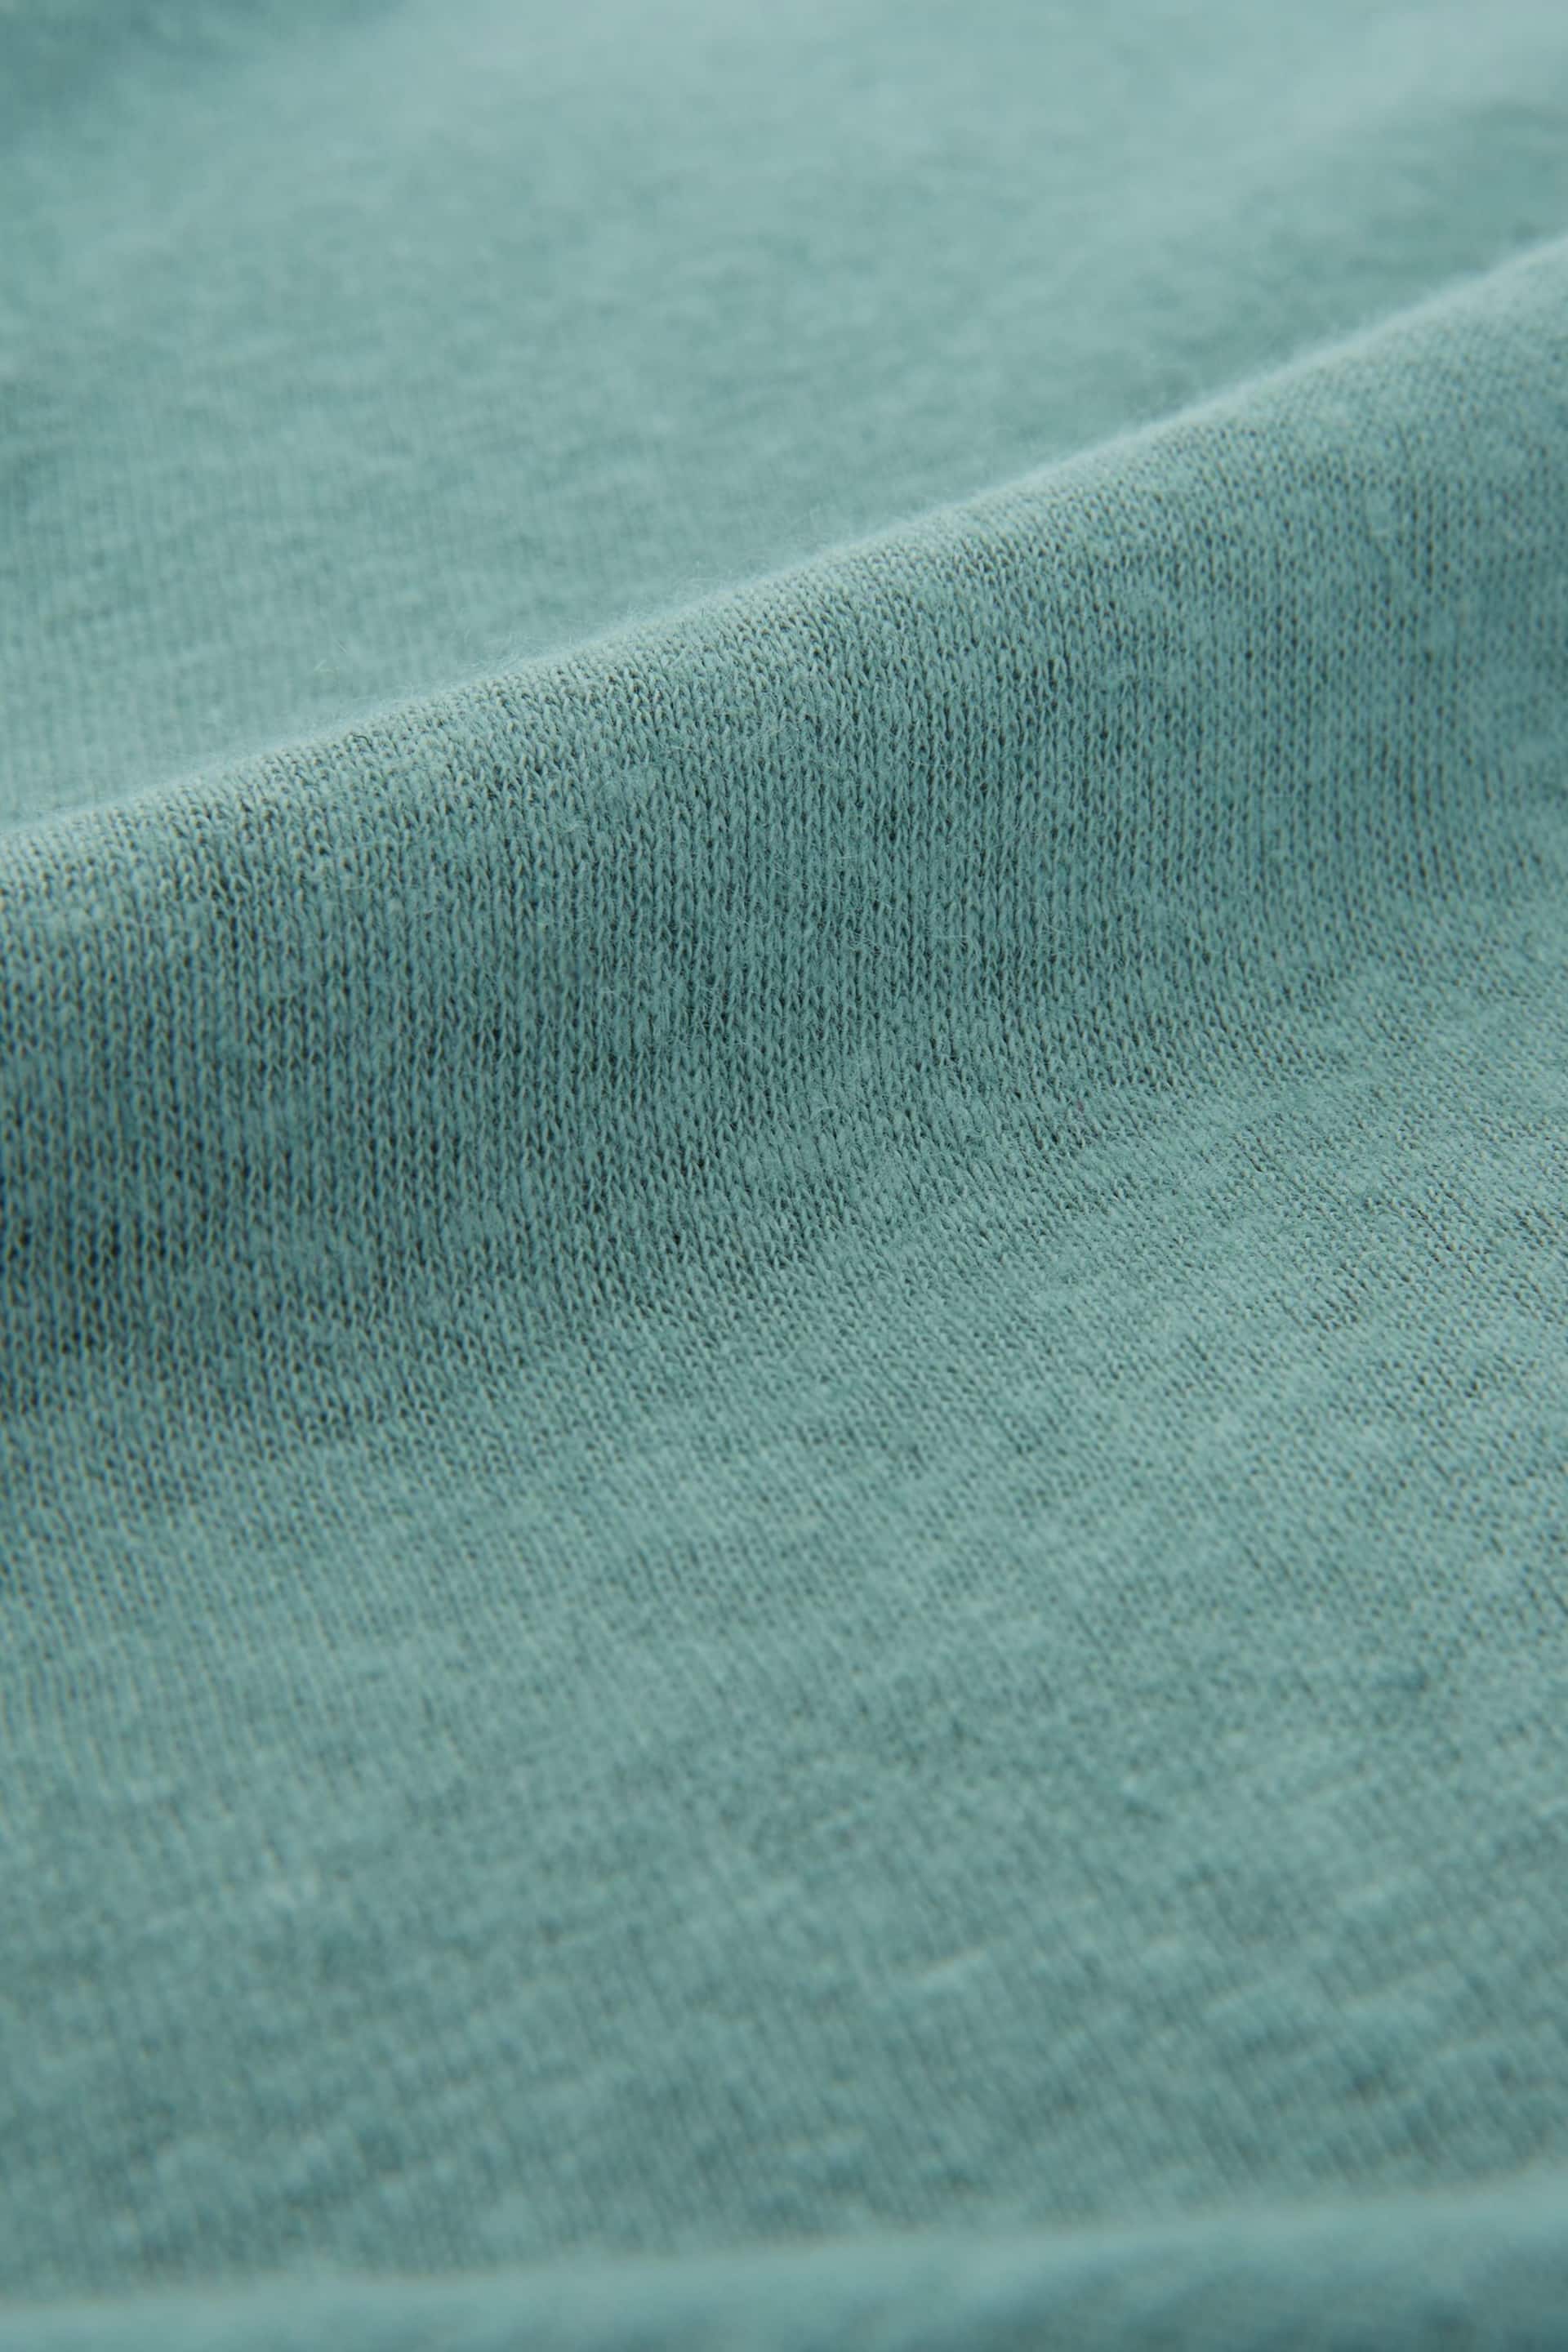 Celtic & Co. Green Linen Cotton Half Sleeve Sweatshirt - Image 7 of 7